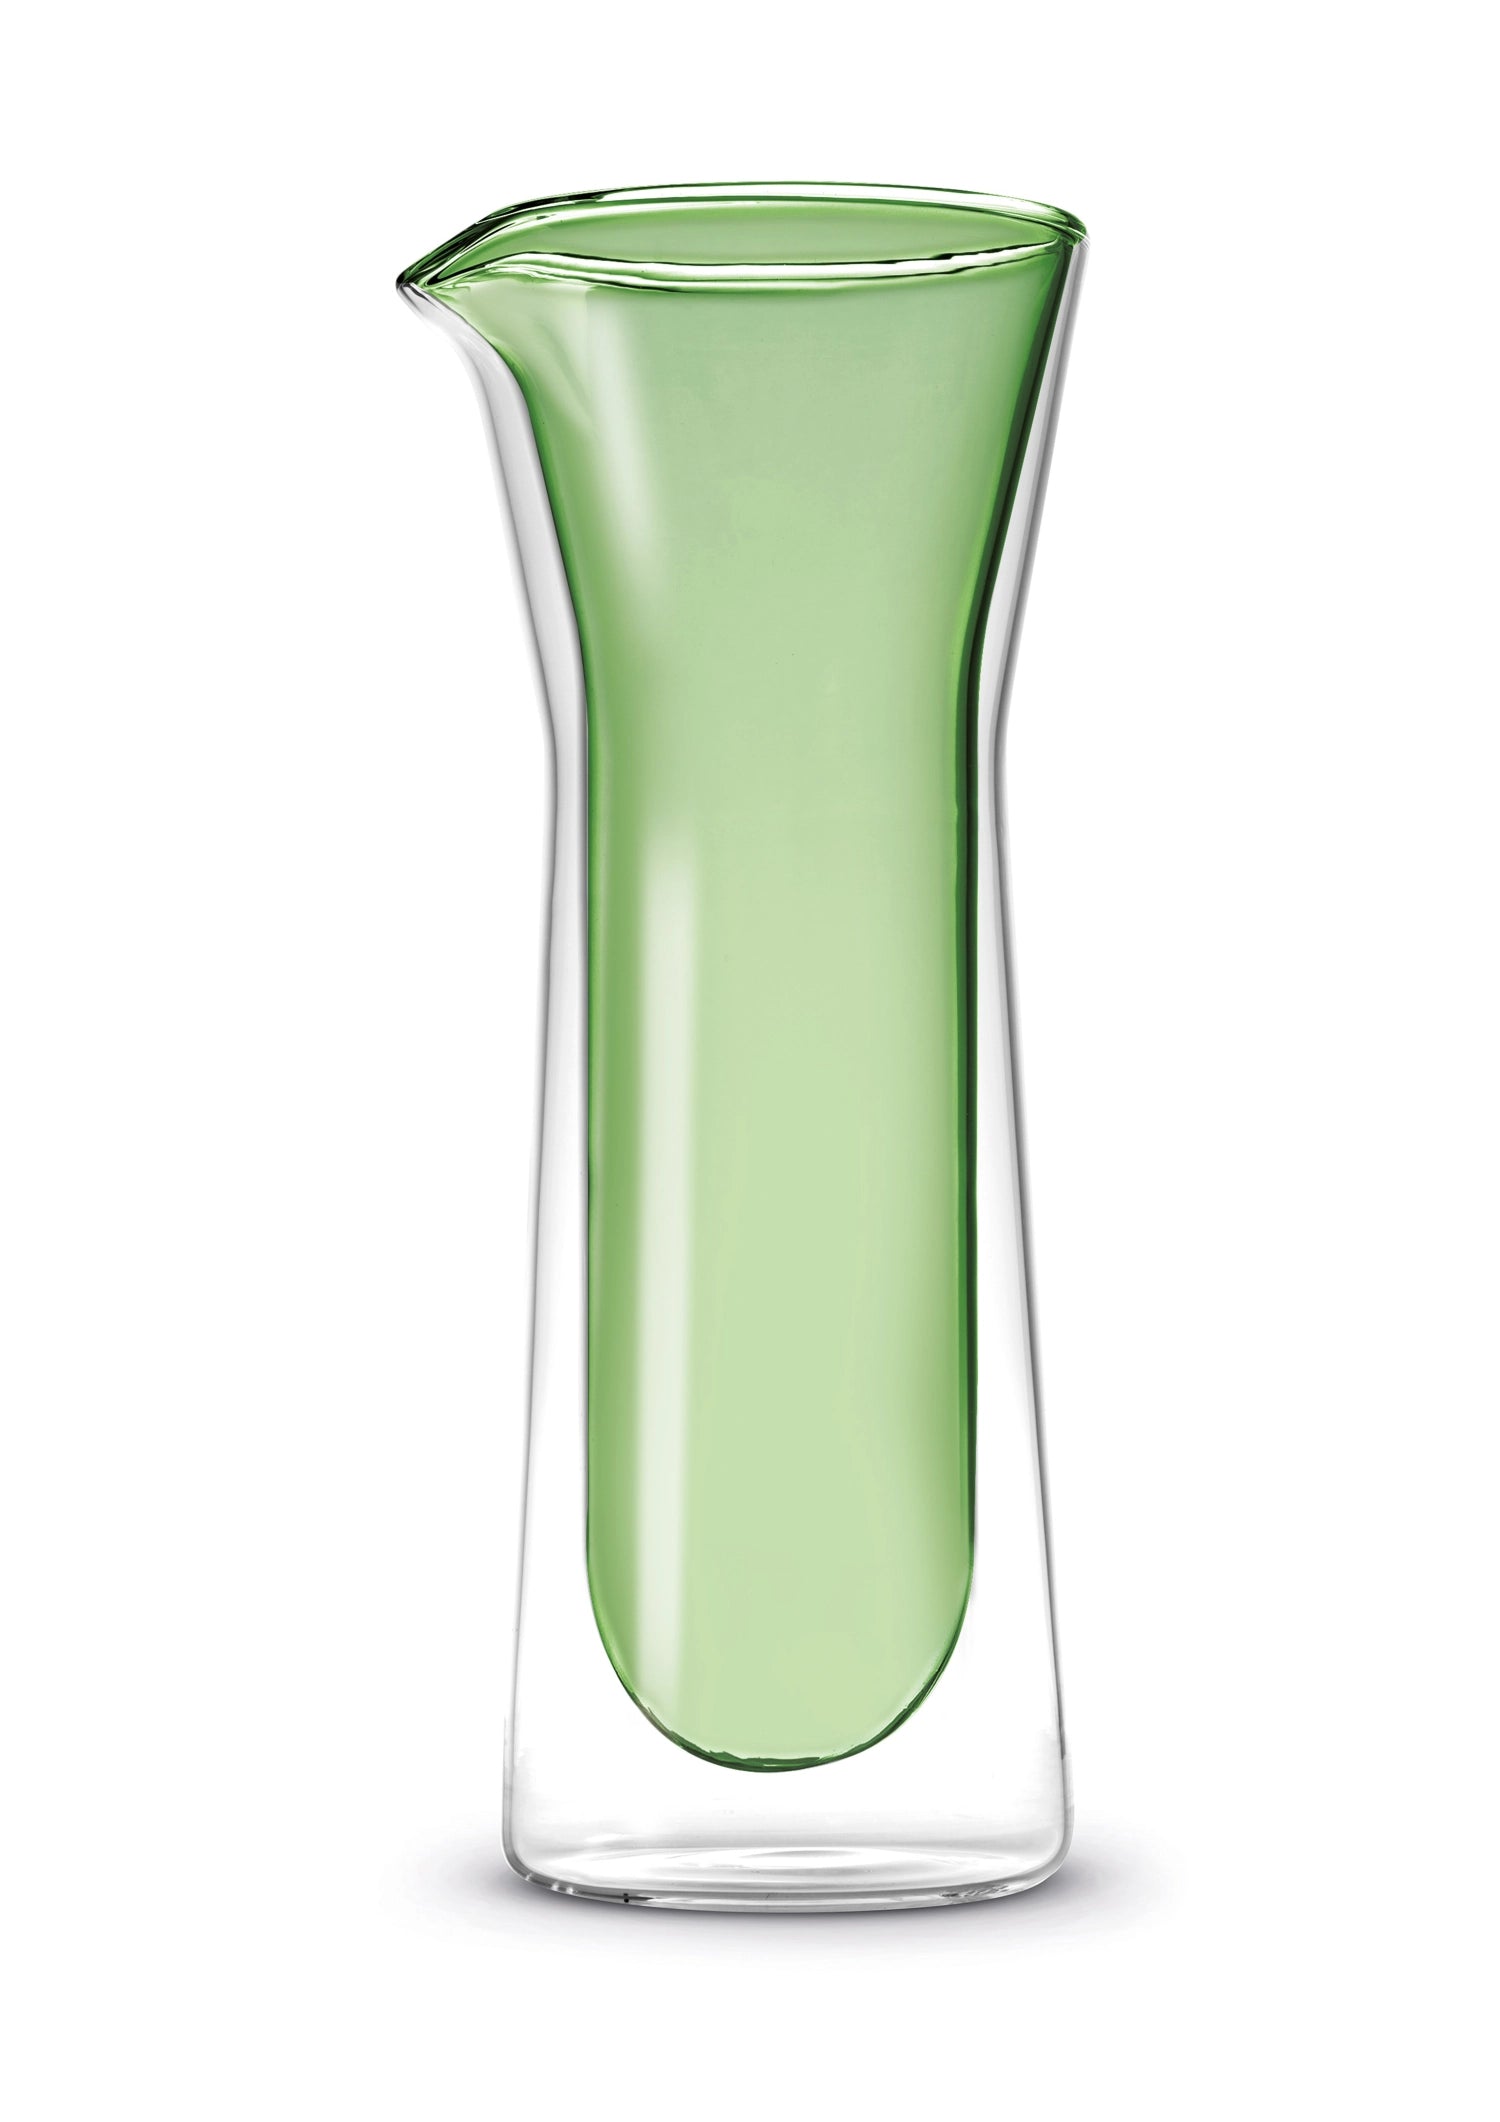 Glaskaraffe doppelw. grün, 800ml - KAQTU Design